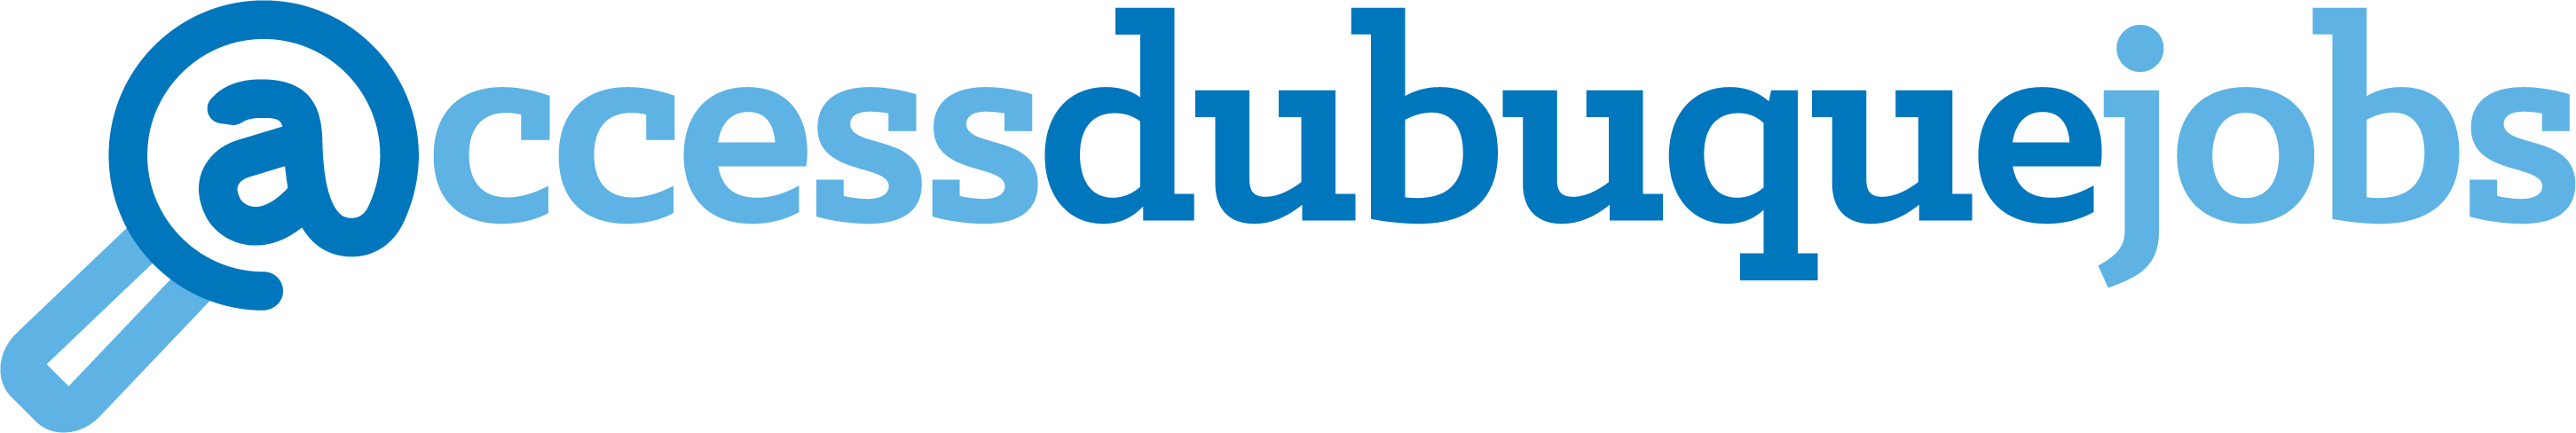 New AccessDubuqueJobs.com Features Enhance Investor Experience